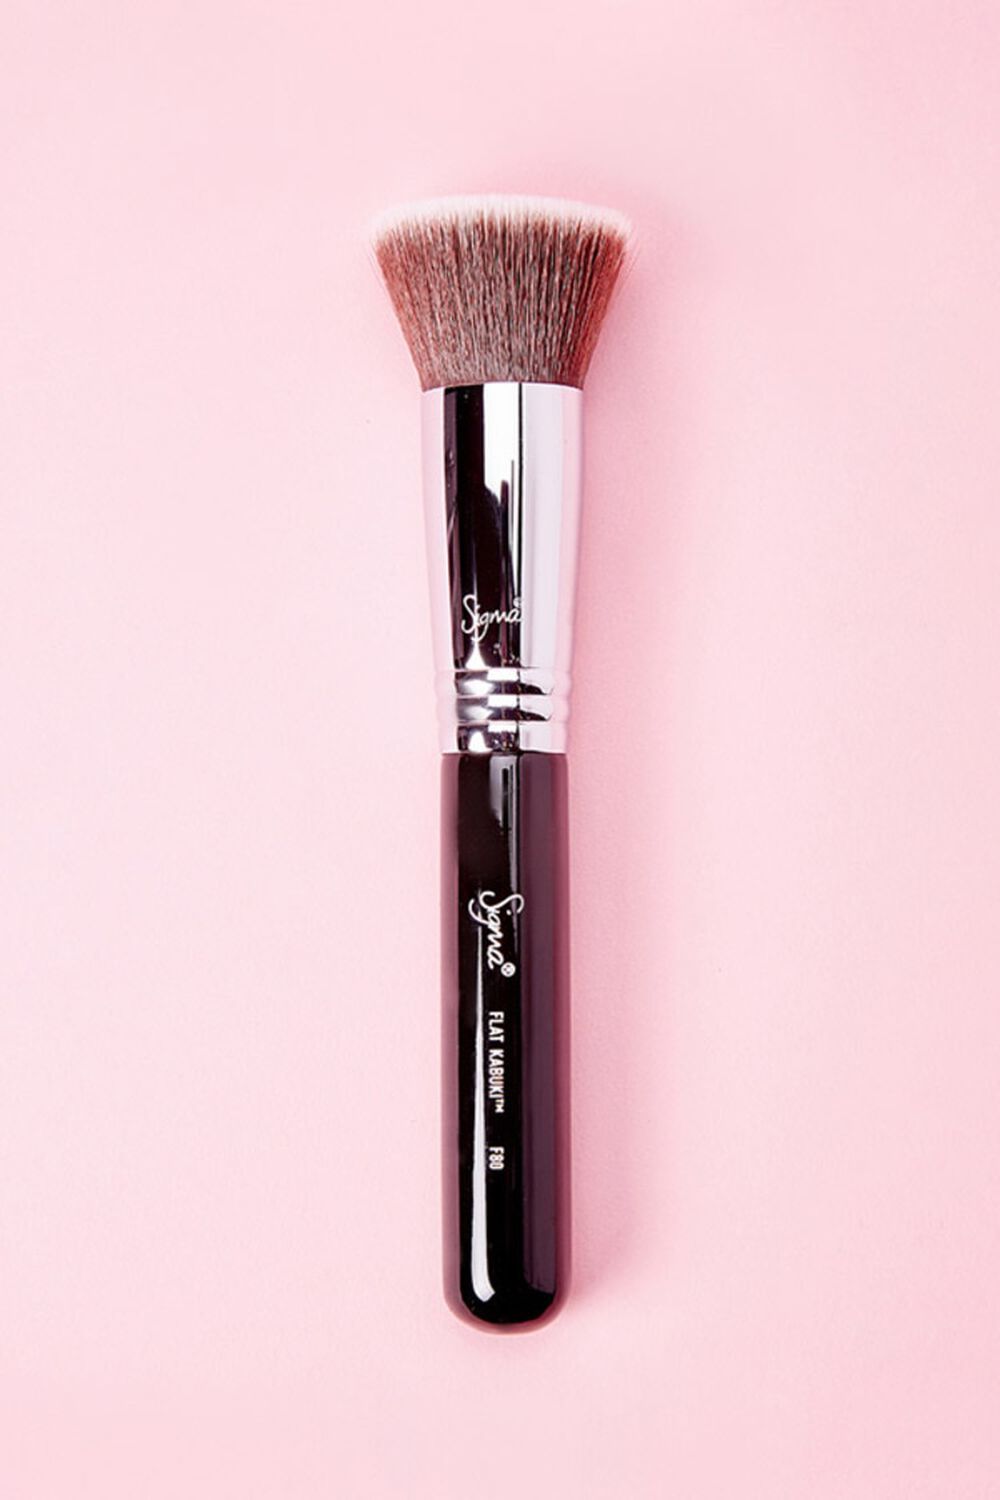 Sigma Beauty Mini Shader - Crease Brush, Pink (E47)